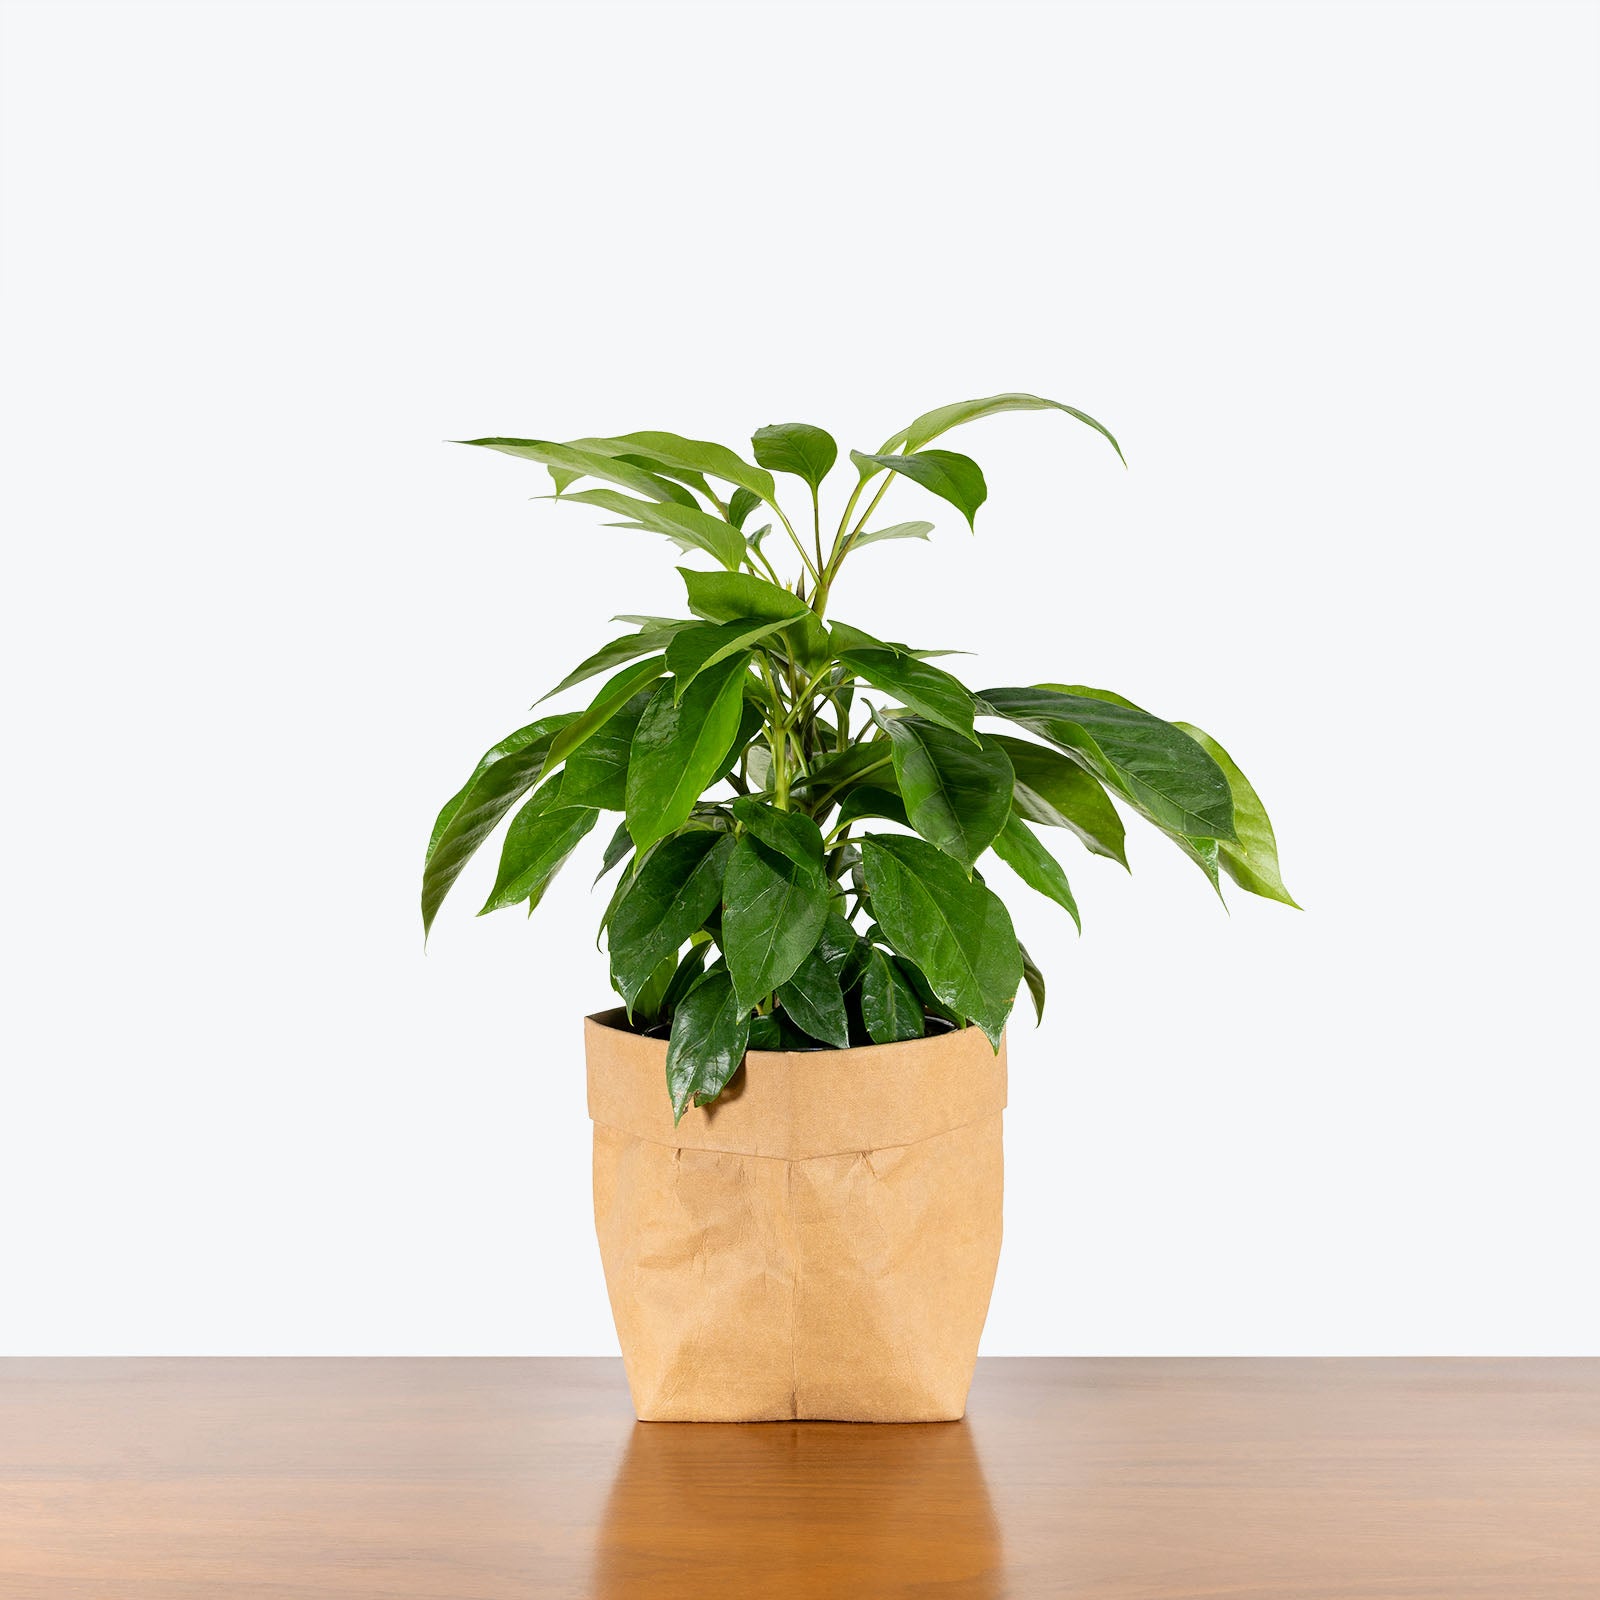 PlantChaser on X: Mint for me. Epipremnun pinnatum 'Mint' showing